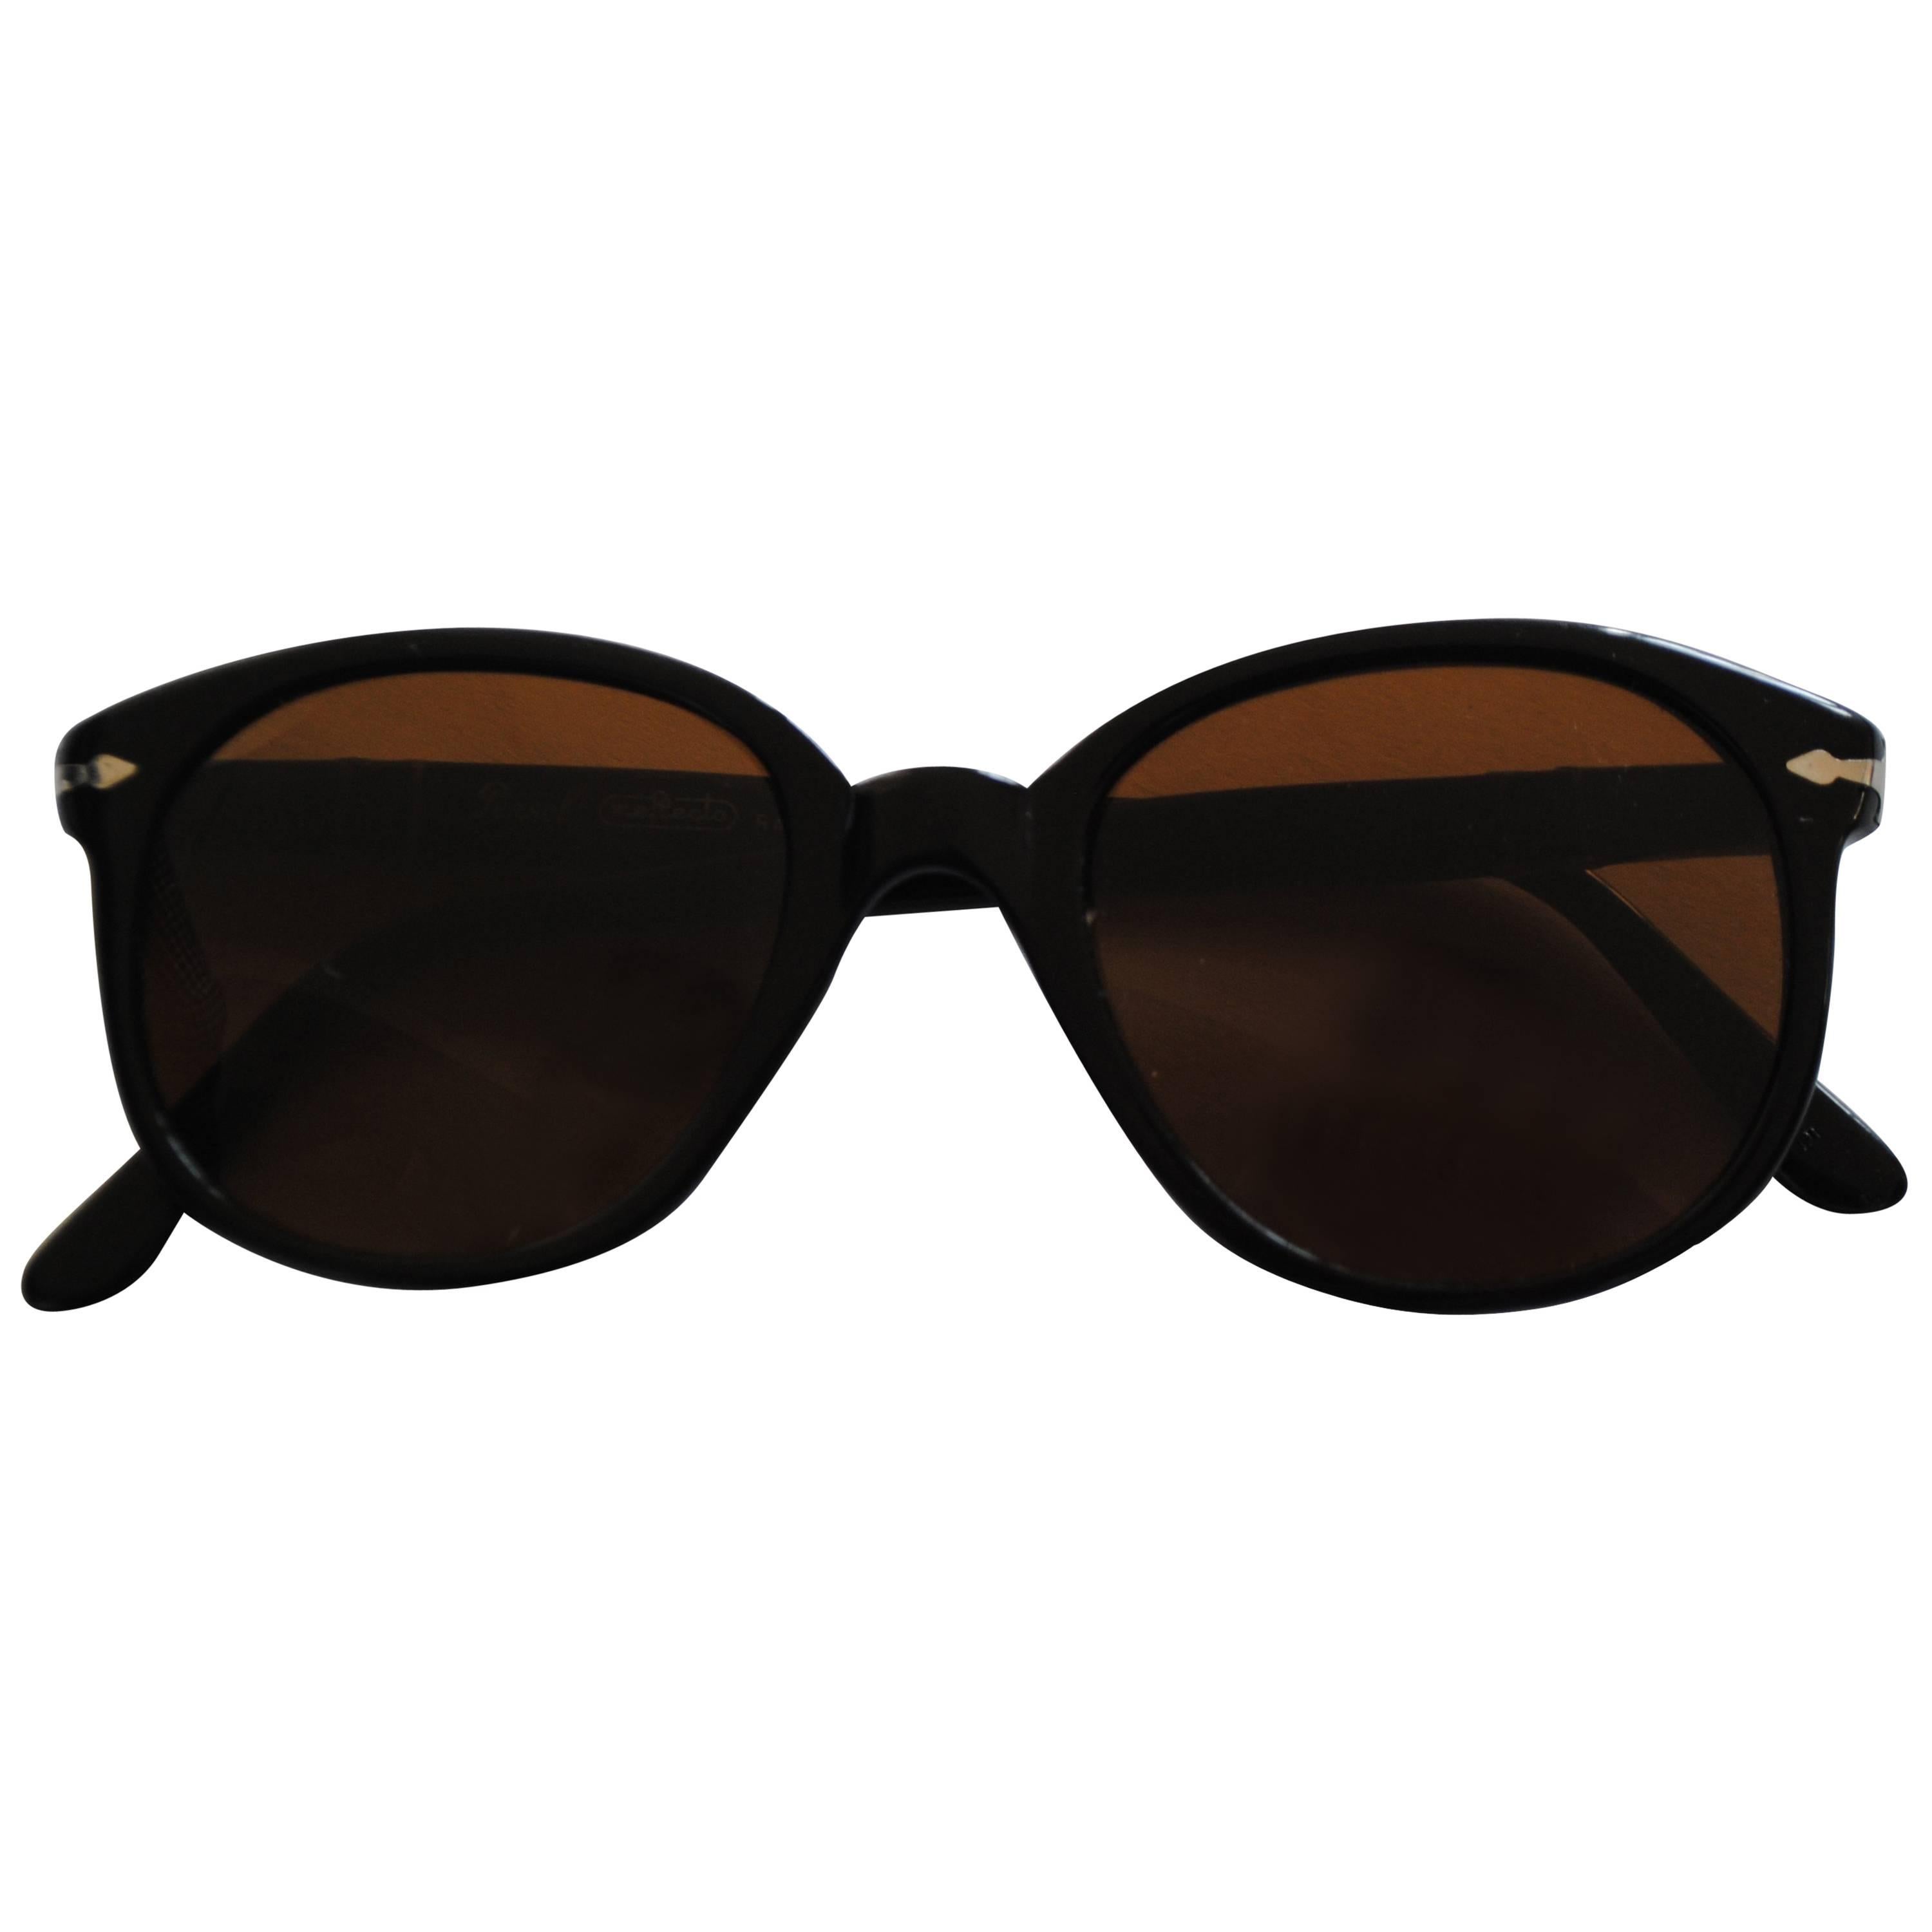 1980s Persol Dark Brown Sunglasses